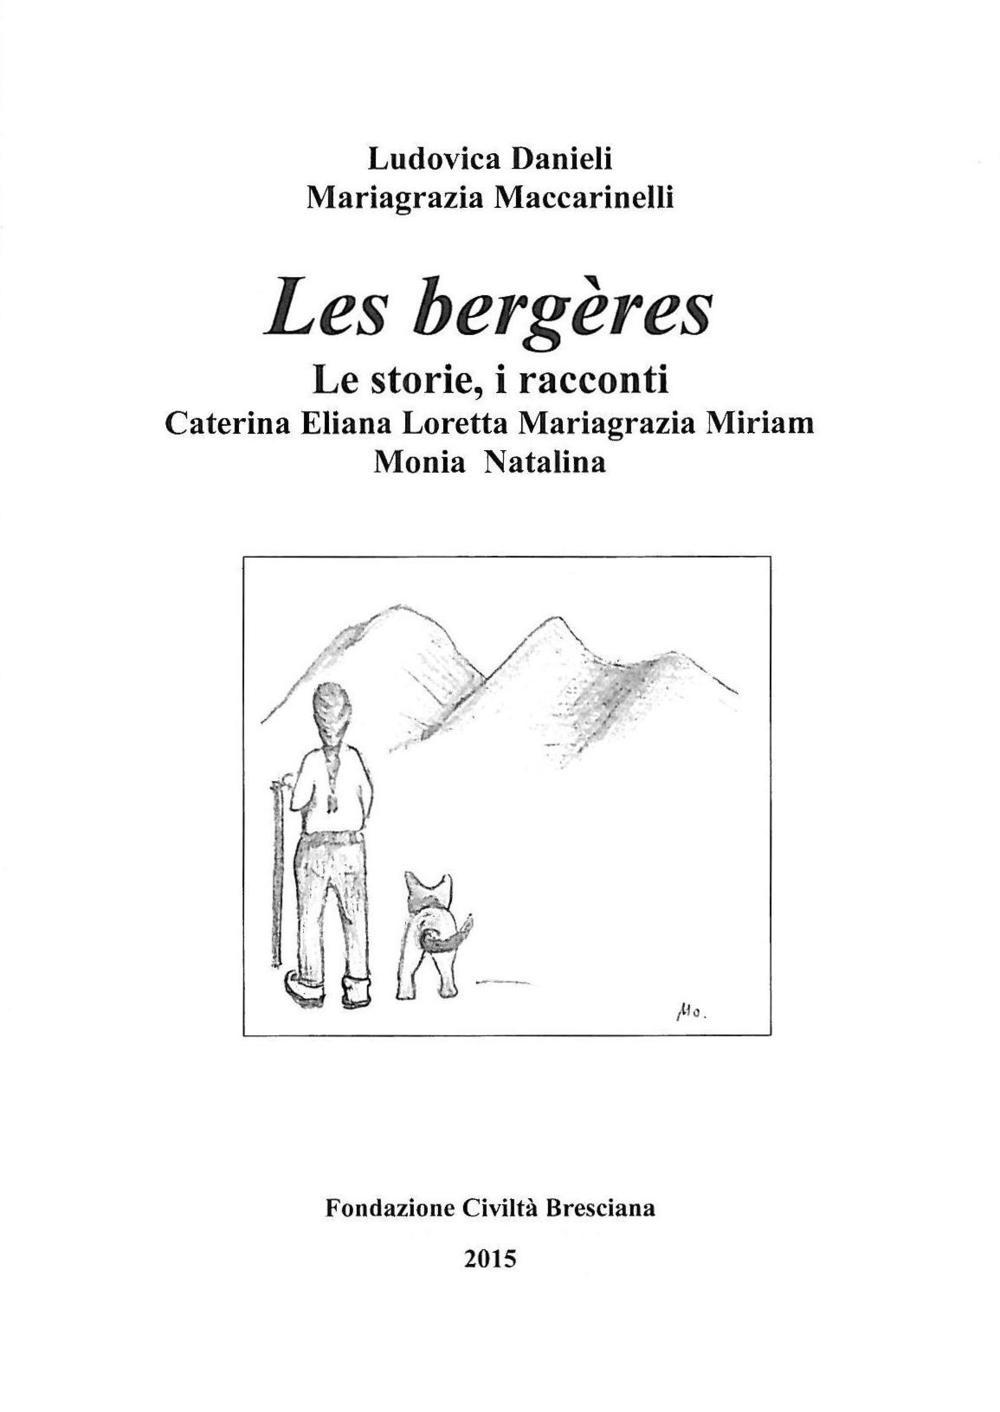 Les bergères. Le storie, i racconti: Caterina, Eliana, Loretta, Mariagrazia, Miriam, Monia, Natalina